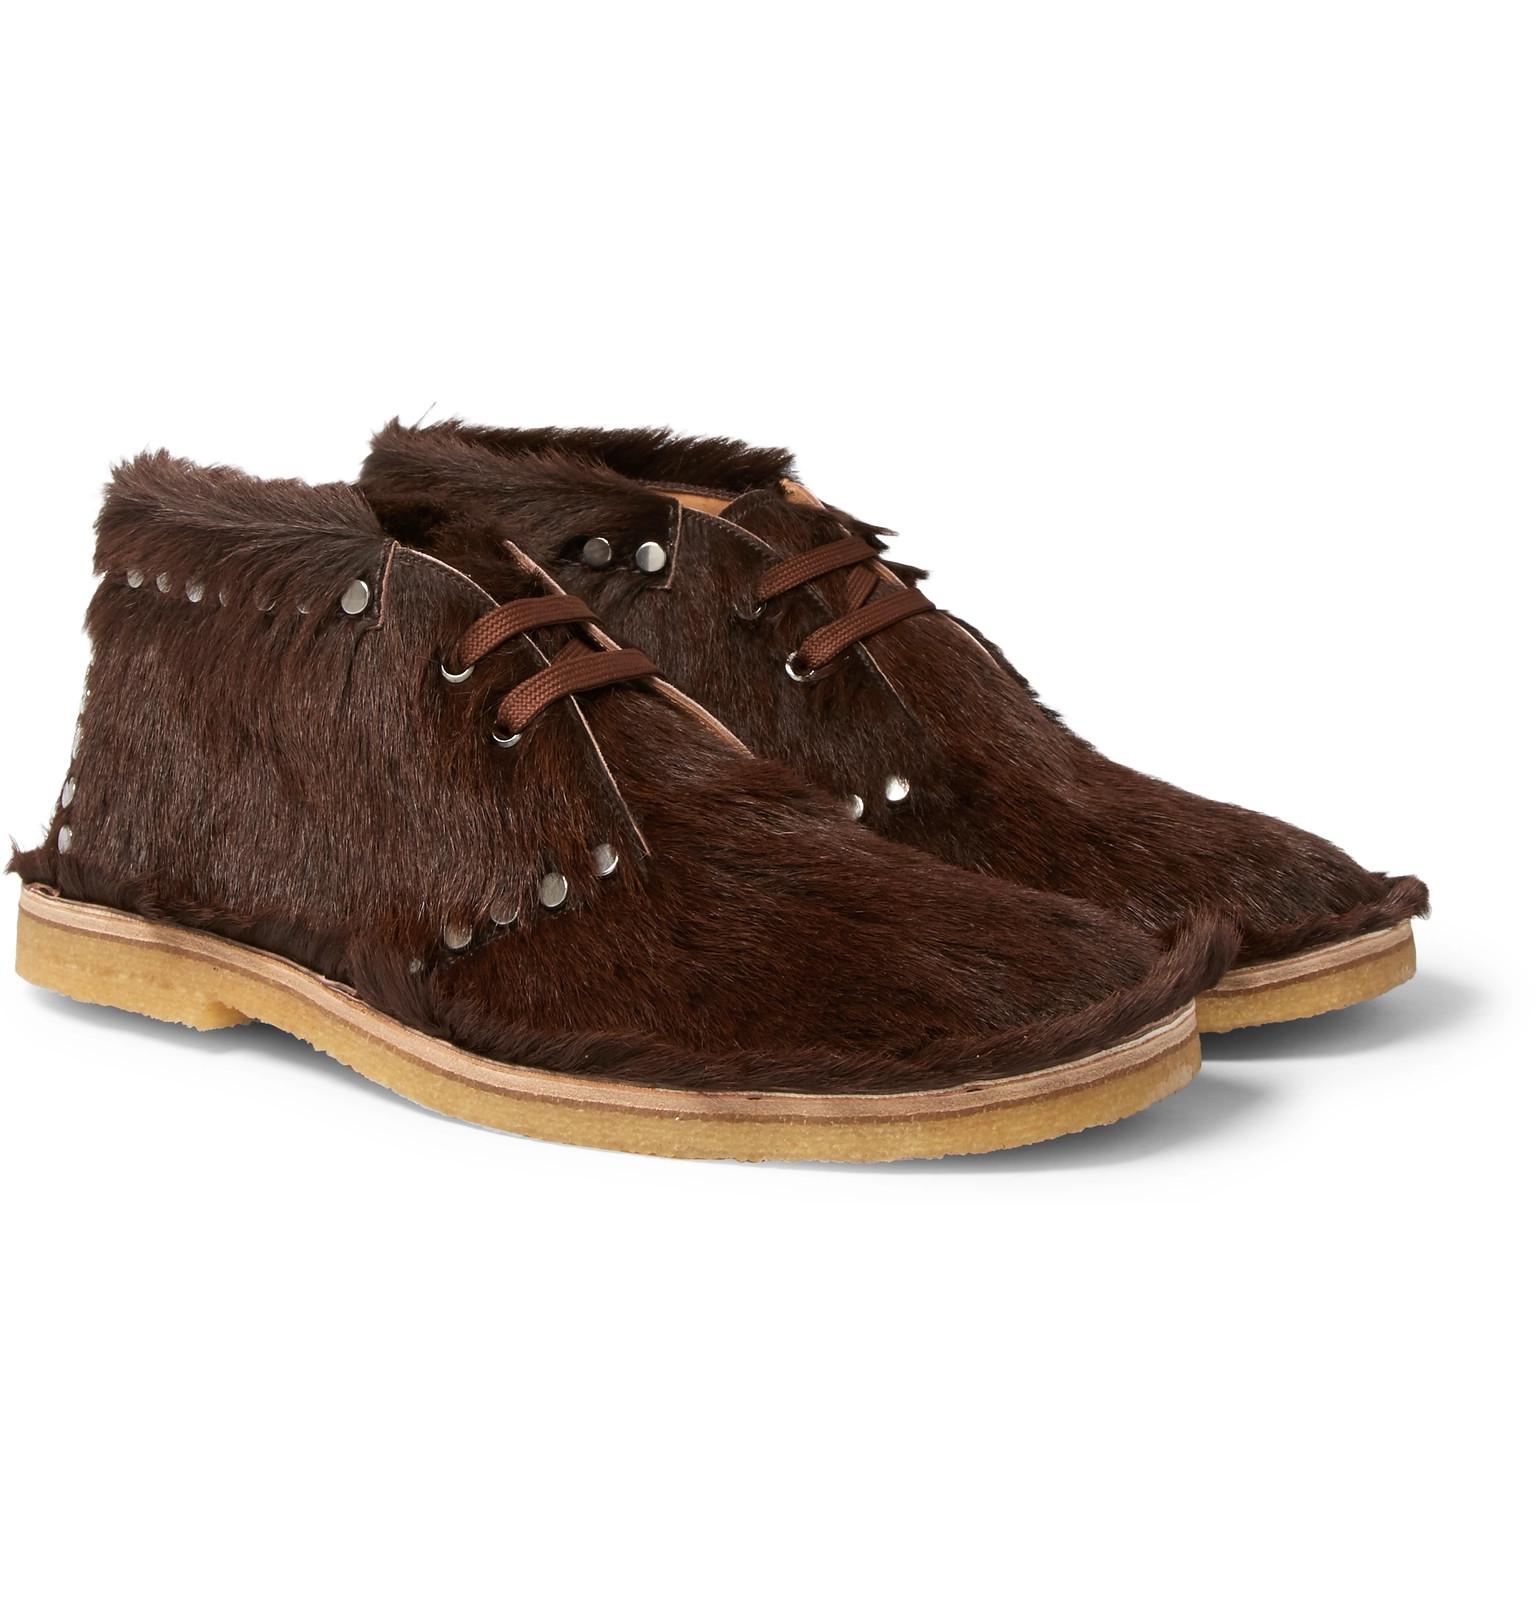 Prada Rubber Embellished Calf Hair Desert Boots in Brown for Men - Lyst